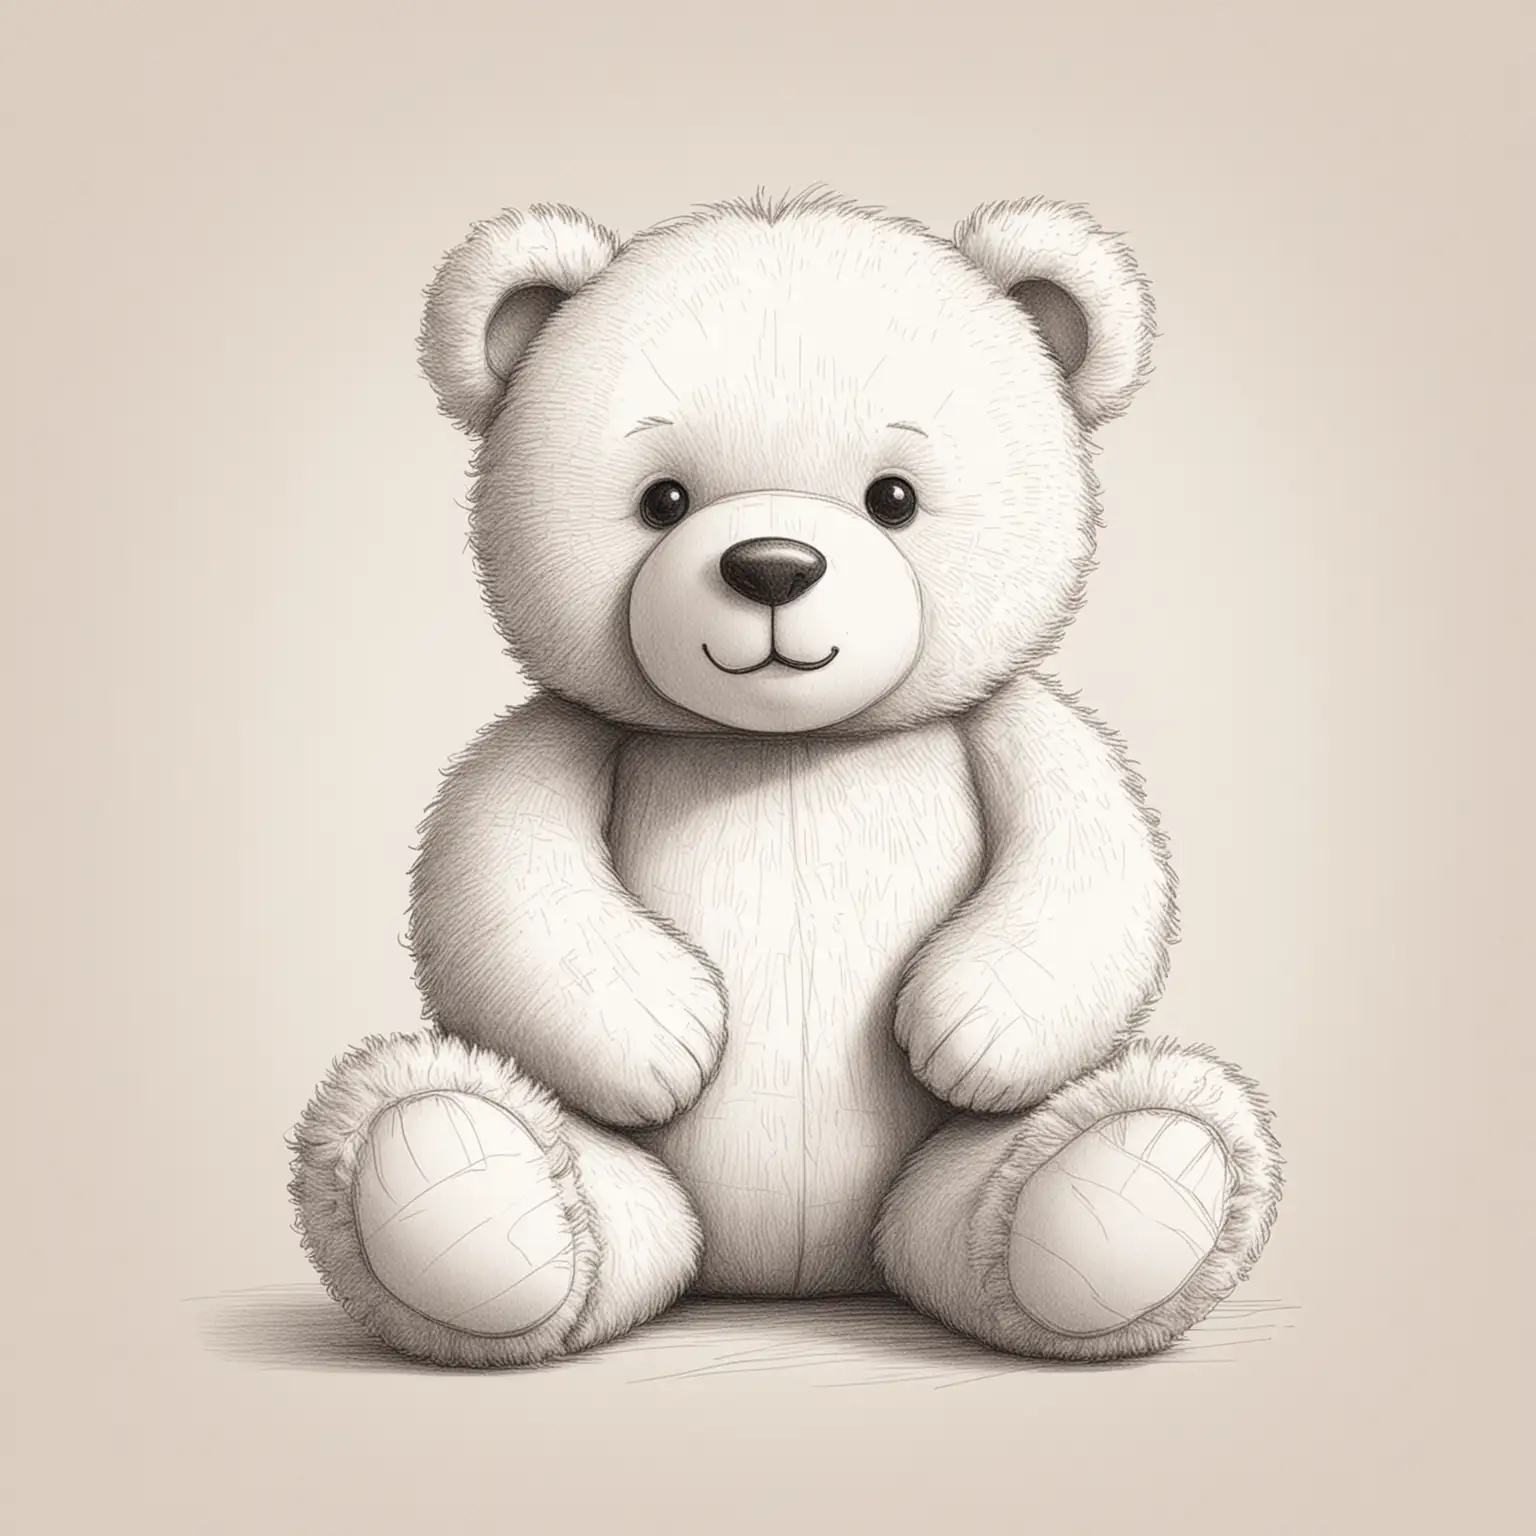 Adorable Fluffy Teddy Bear Sitting on a Pillow Minimal Pencil Sketch Art